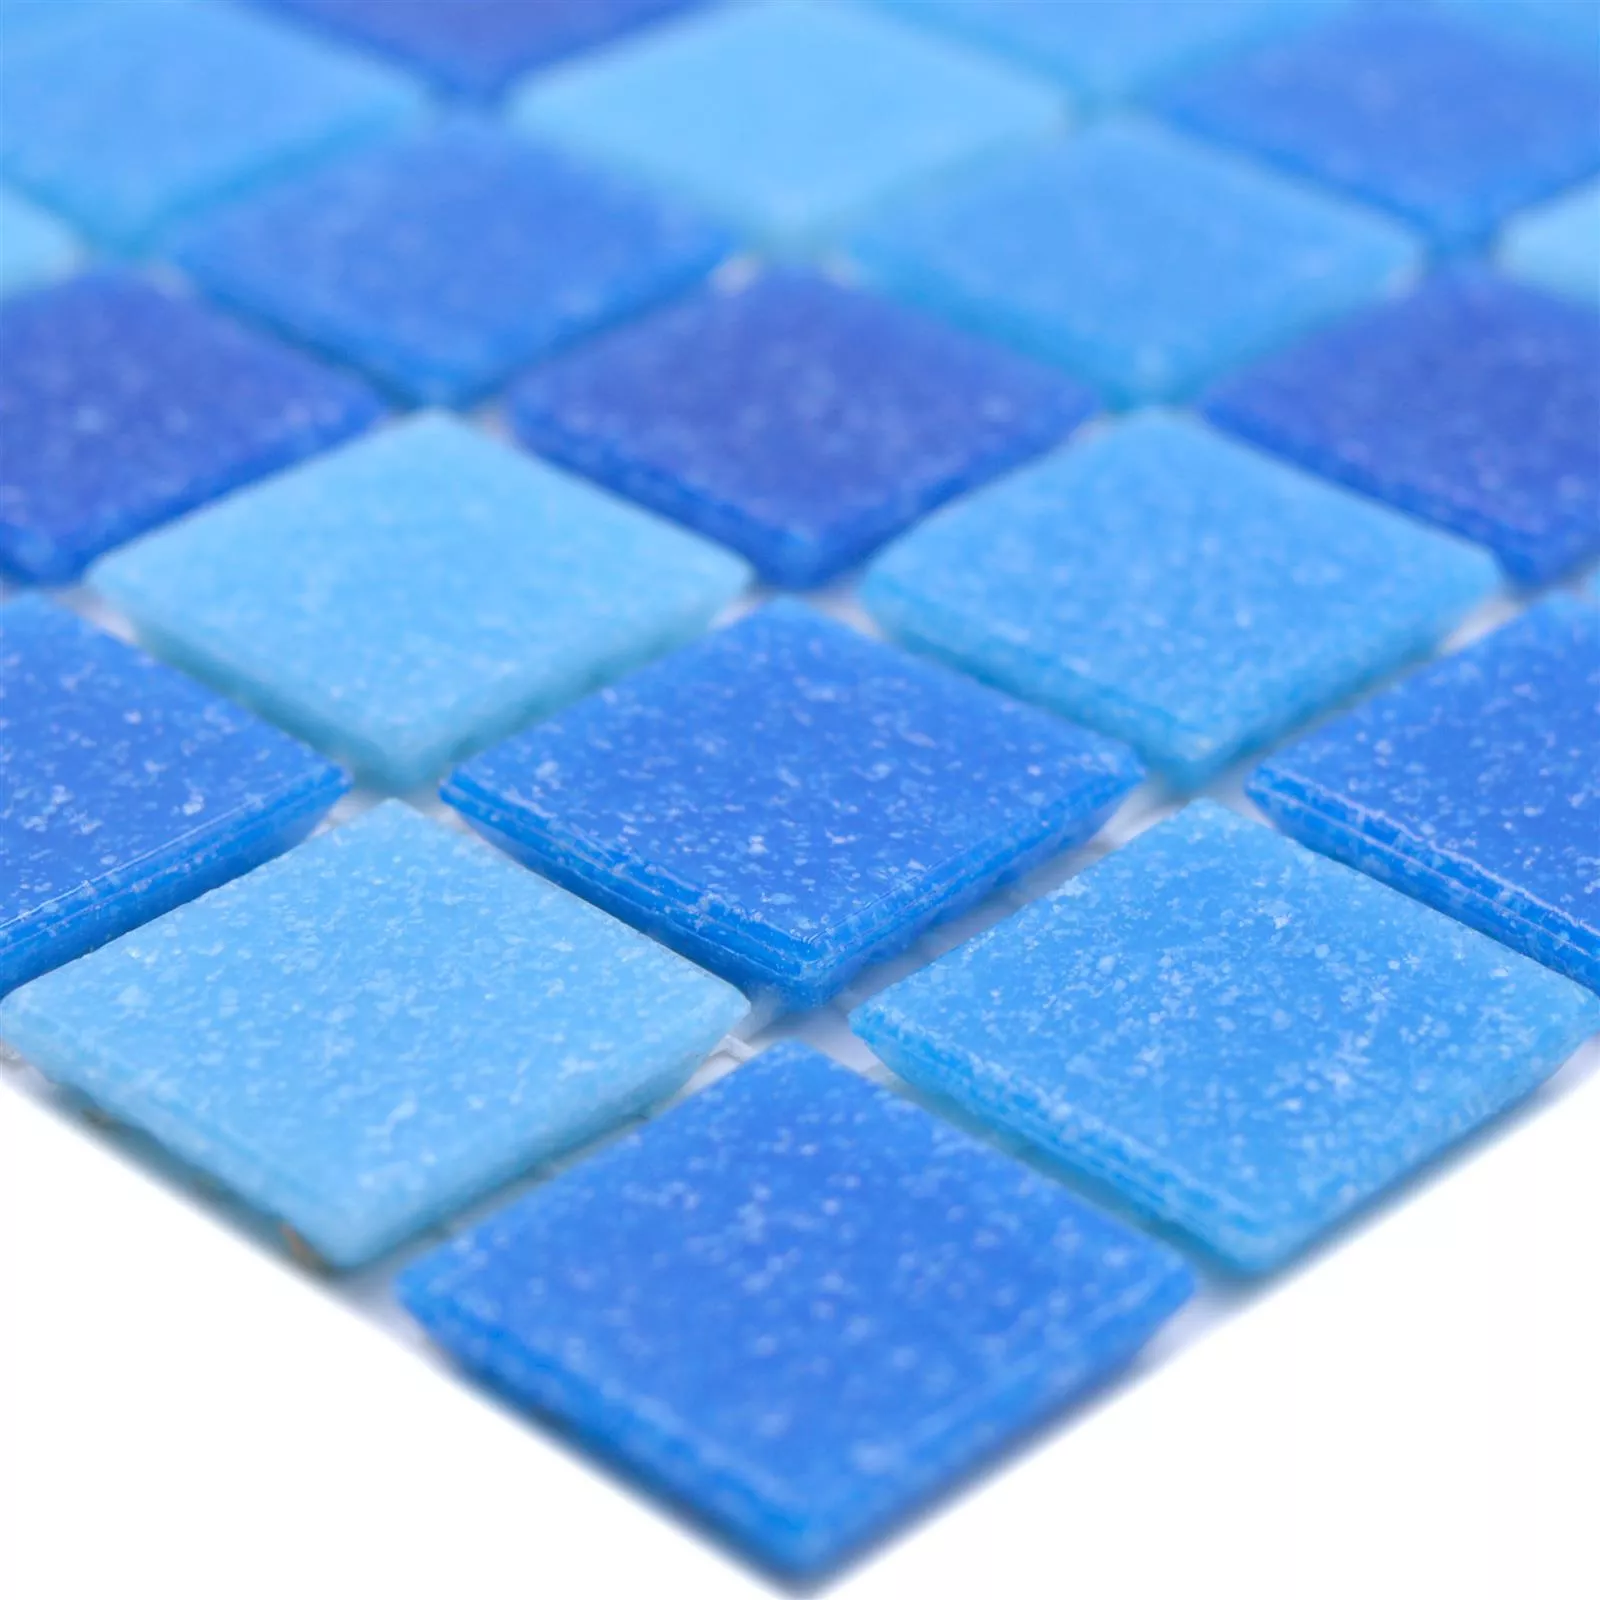 Plavecký Bazén Mozaika North Sea Modrá Světle Modrá Mix